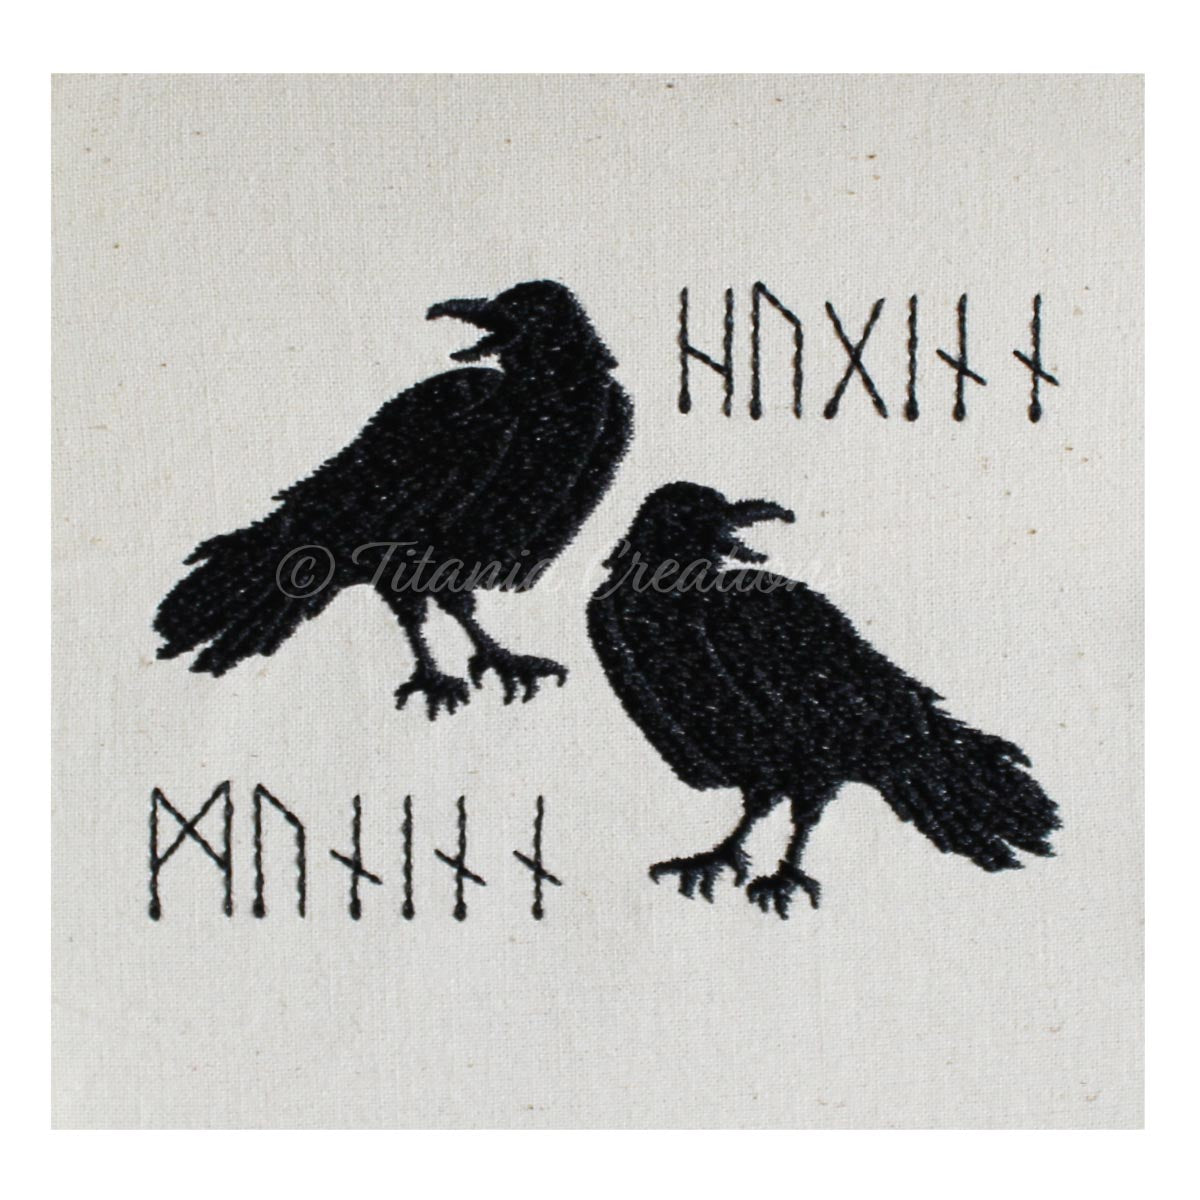 Huginn and Muninn Ravens 4x4 5x7